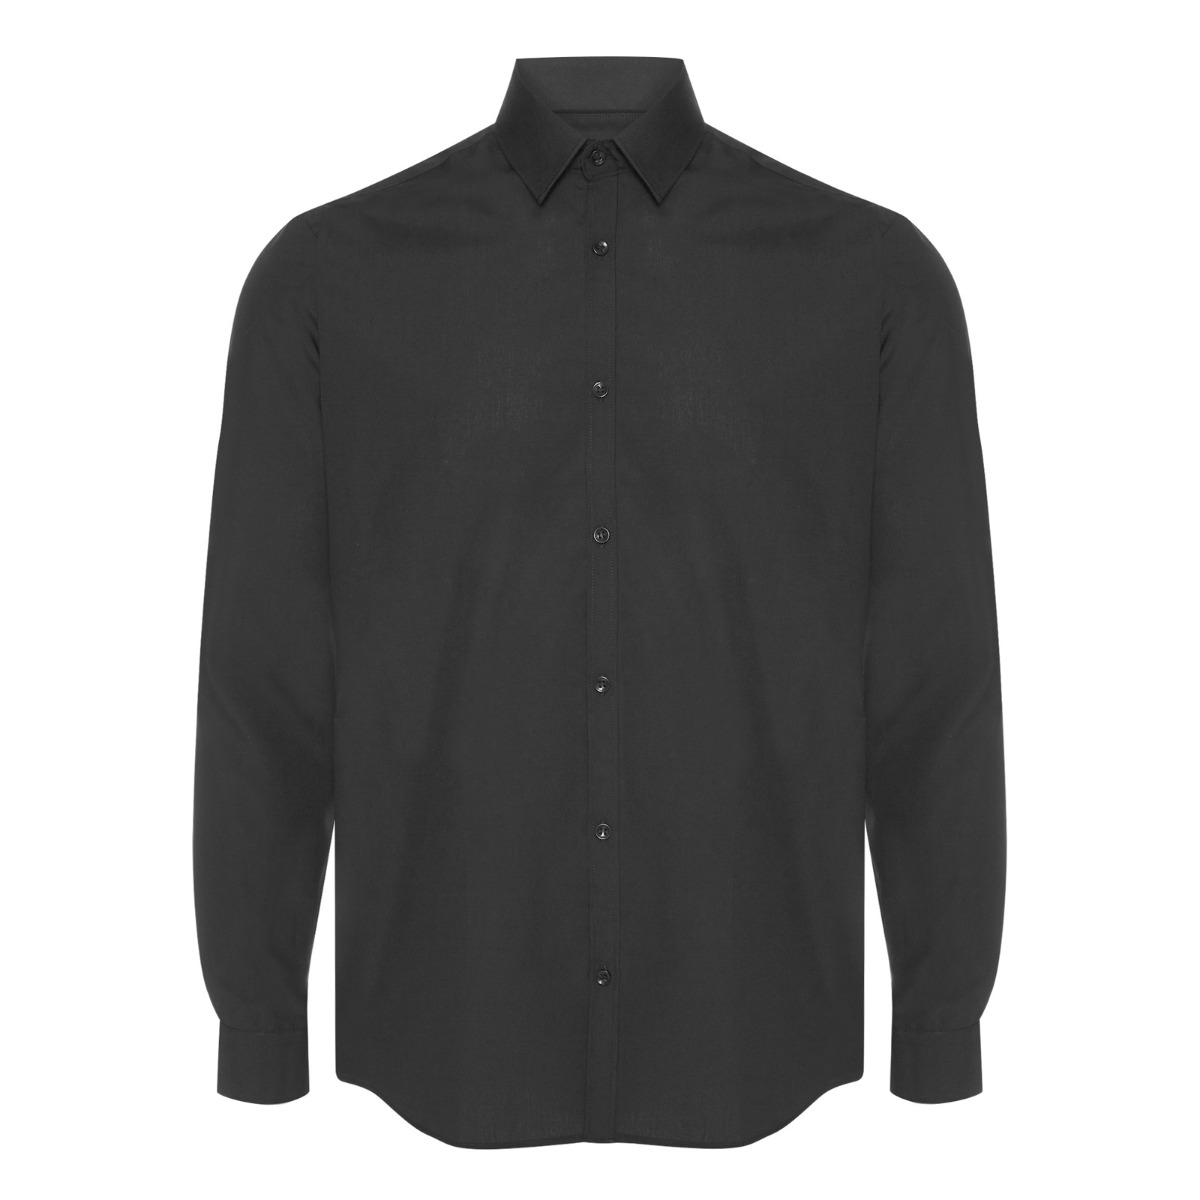 plain black long sleeve shirts